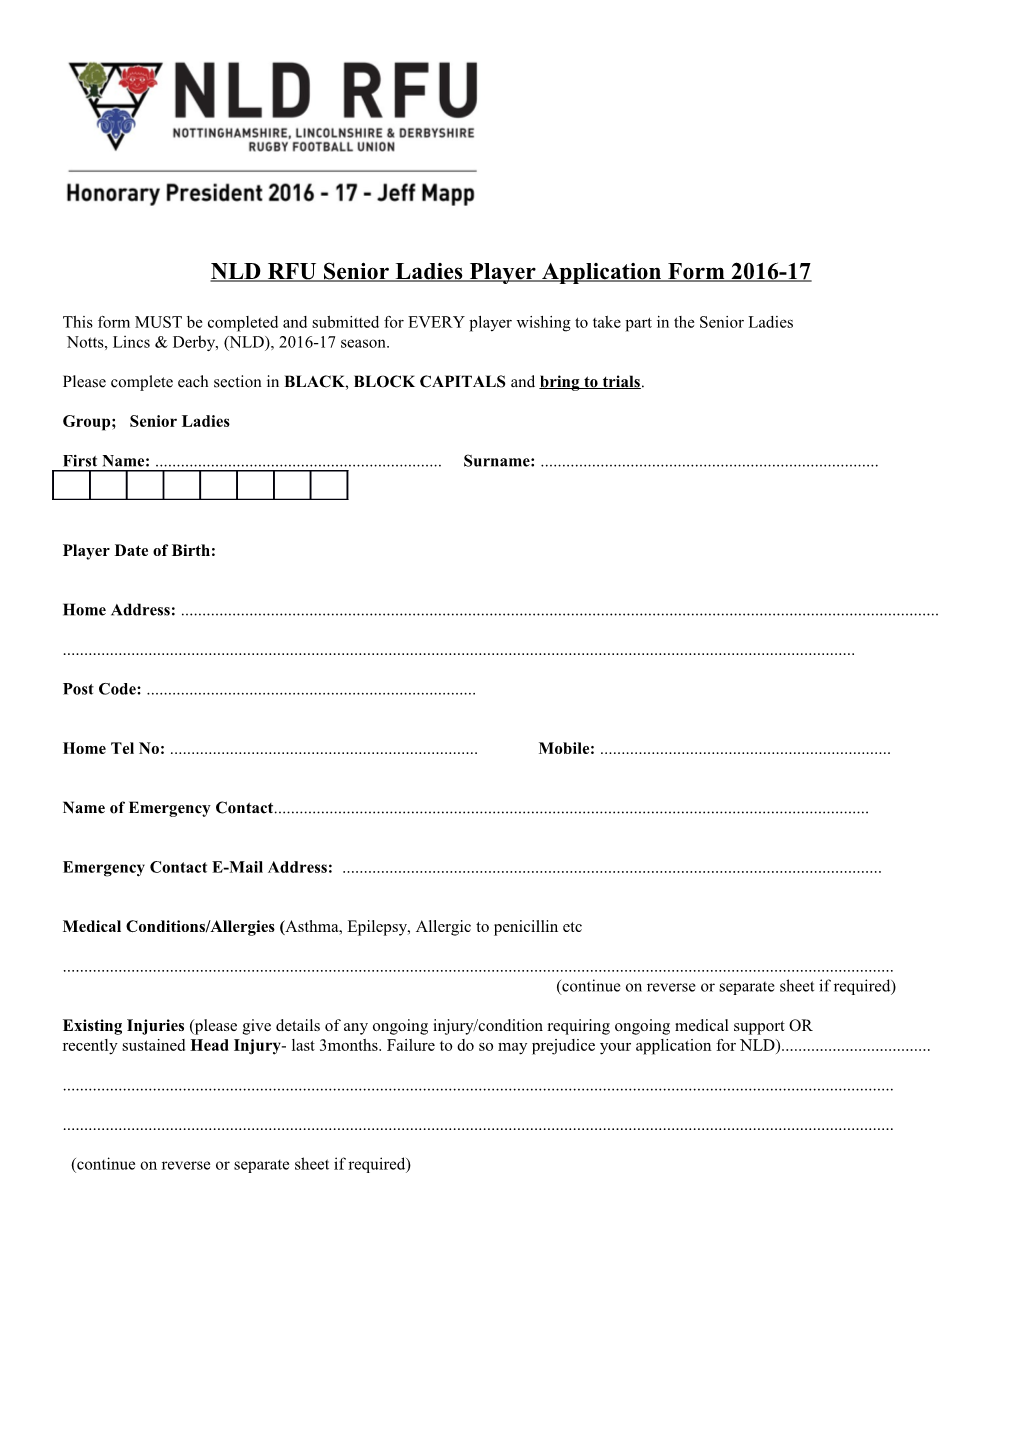 NLD RFU Senior Ladies Player Application Form 2016-17